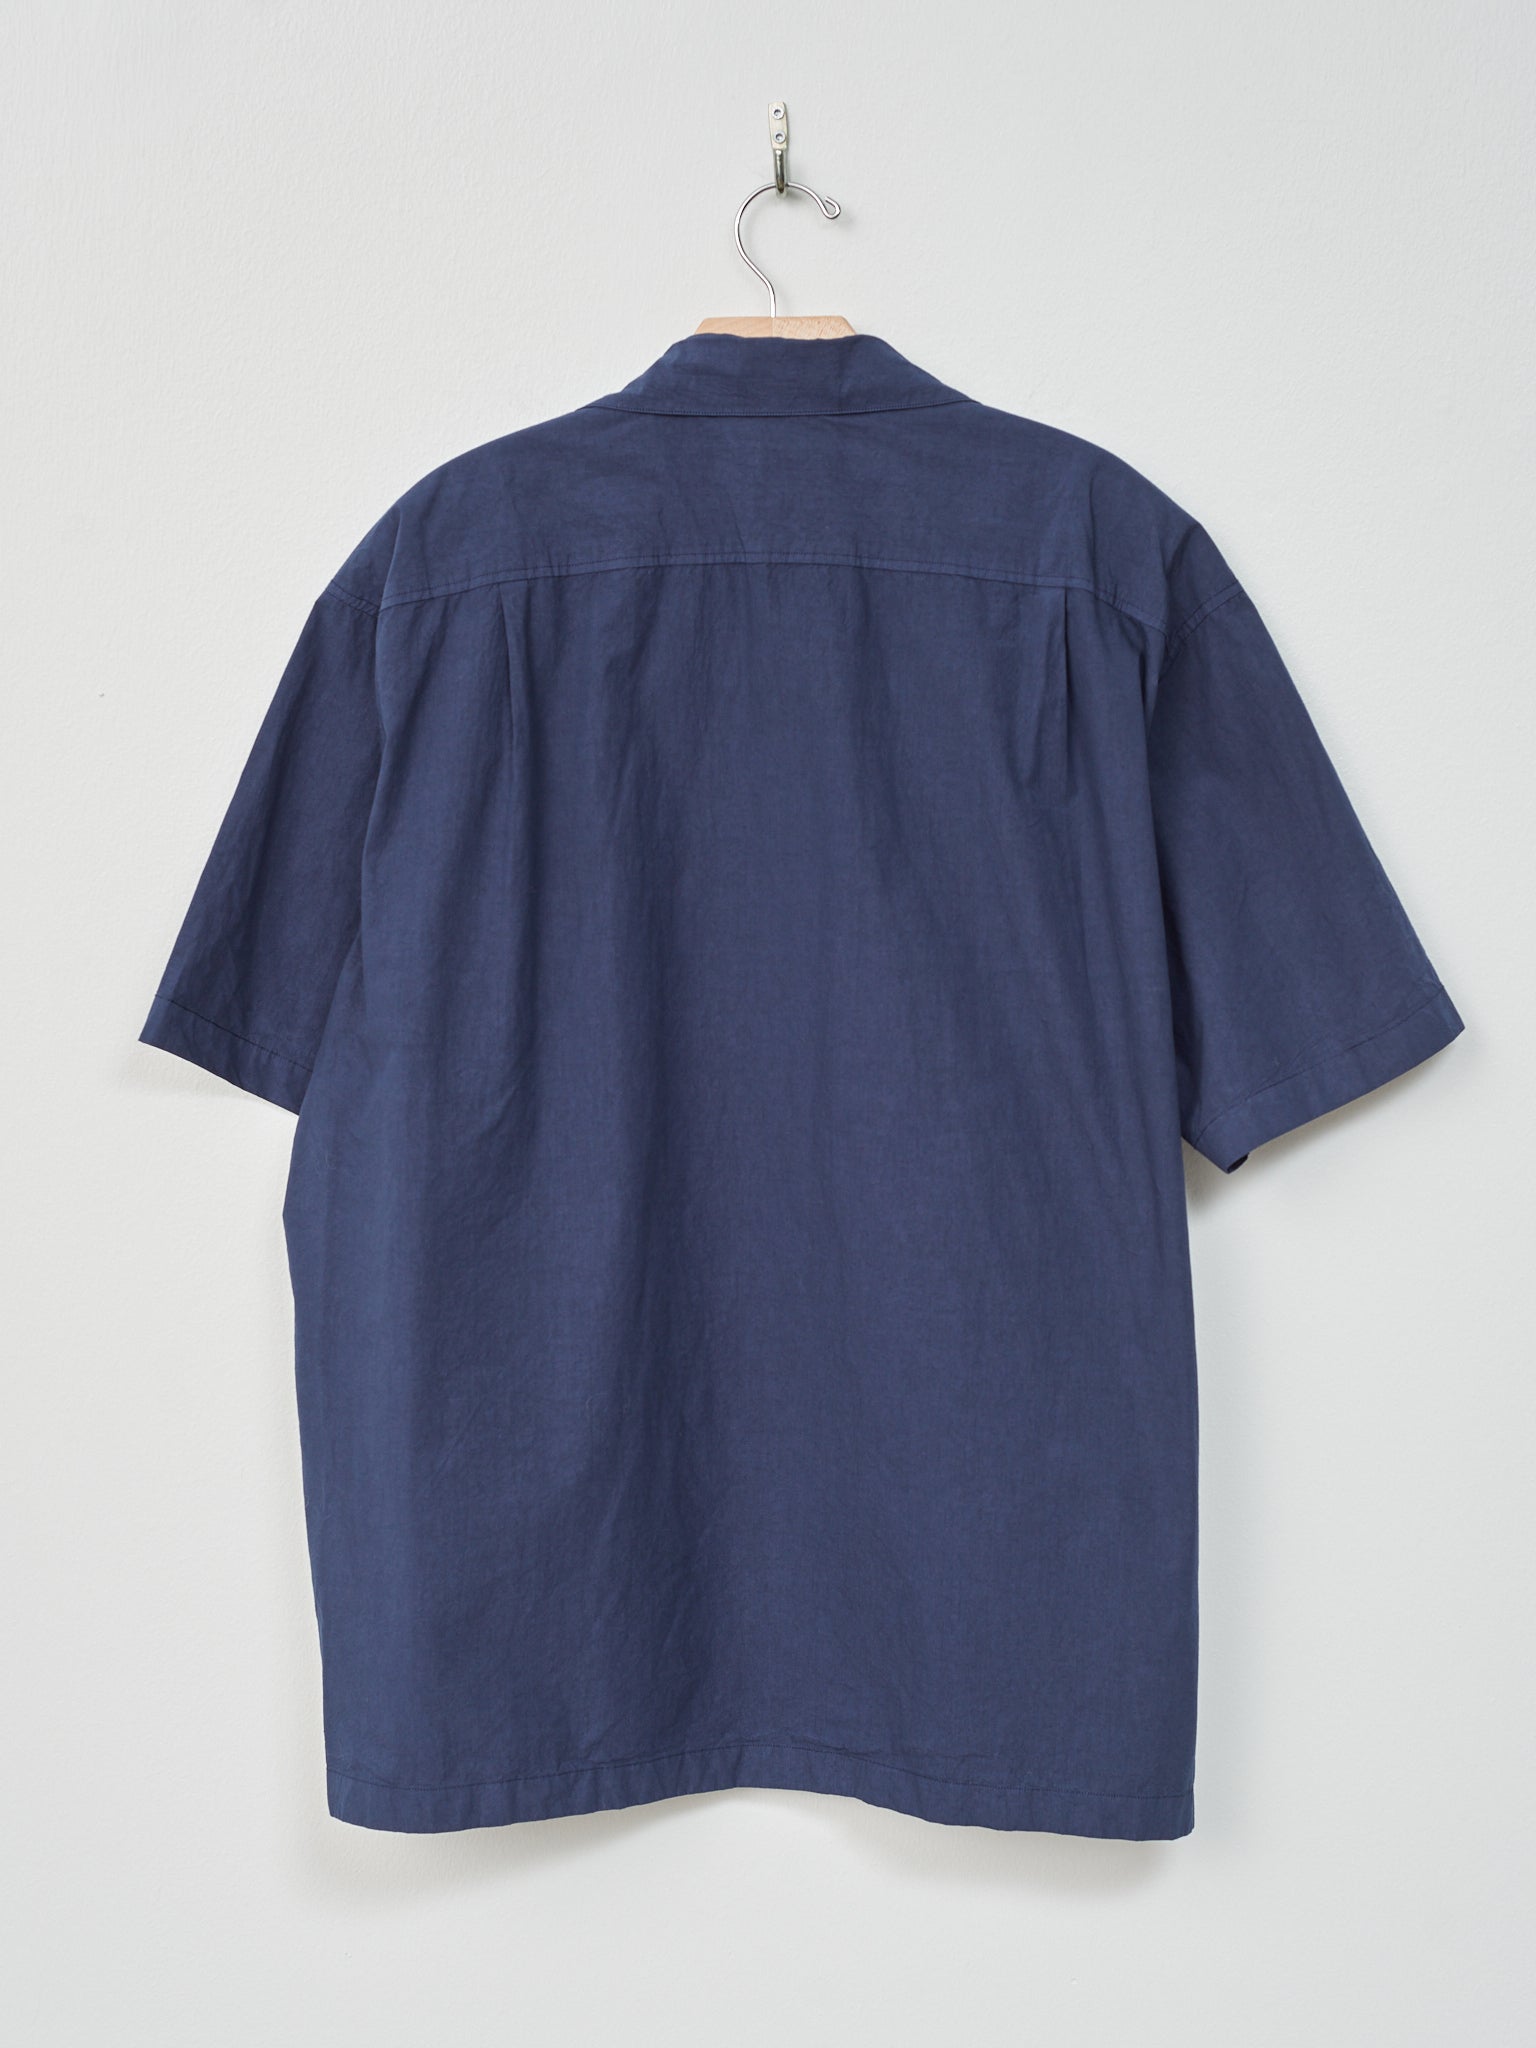 Namu Shop - Yoko Sakamoto Open Collar Shirt - Navy